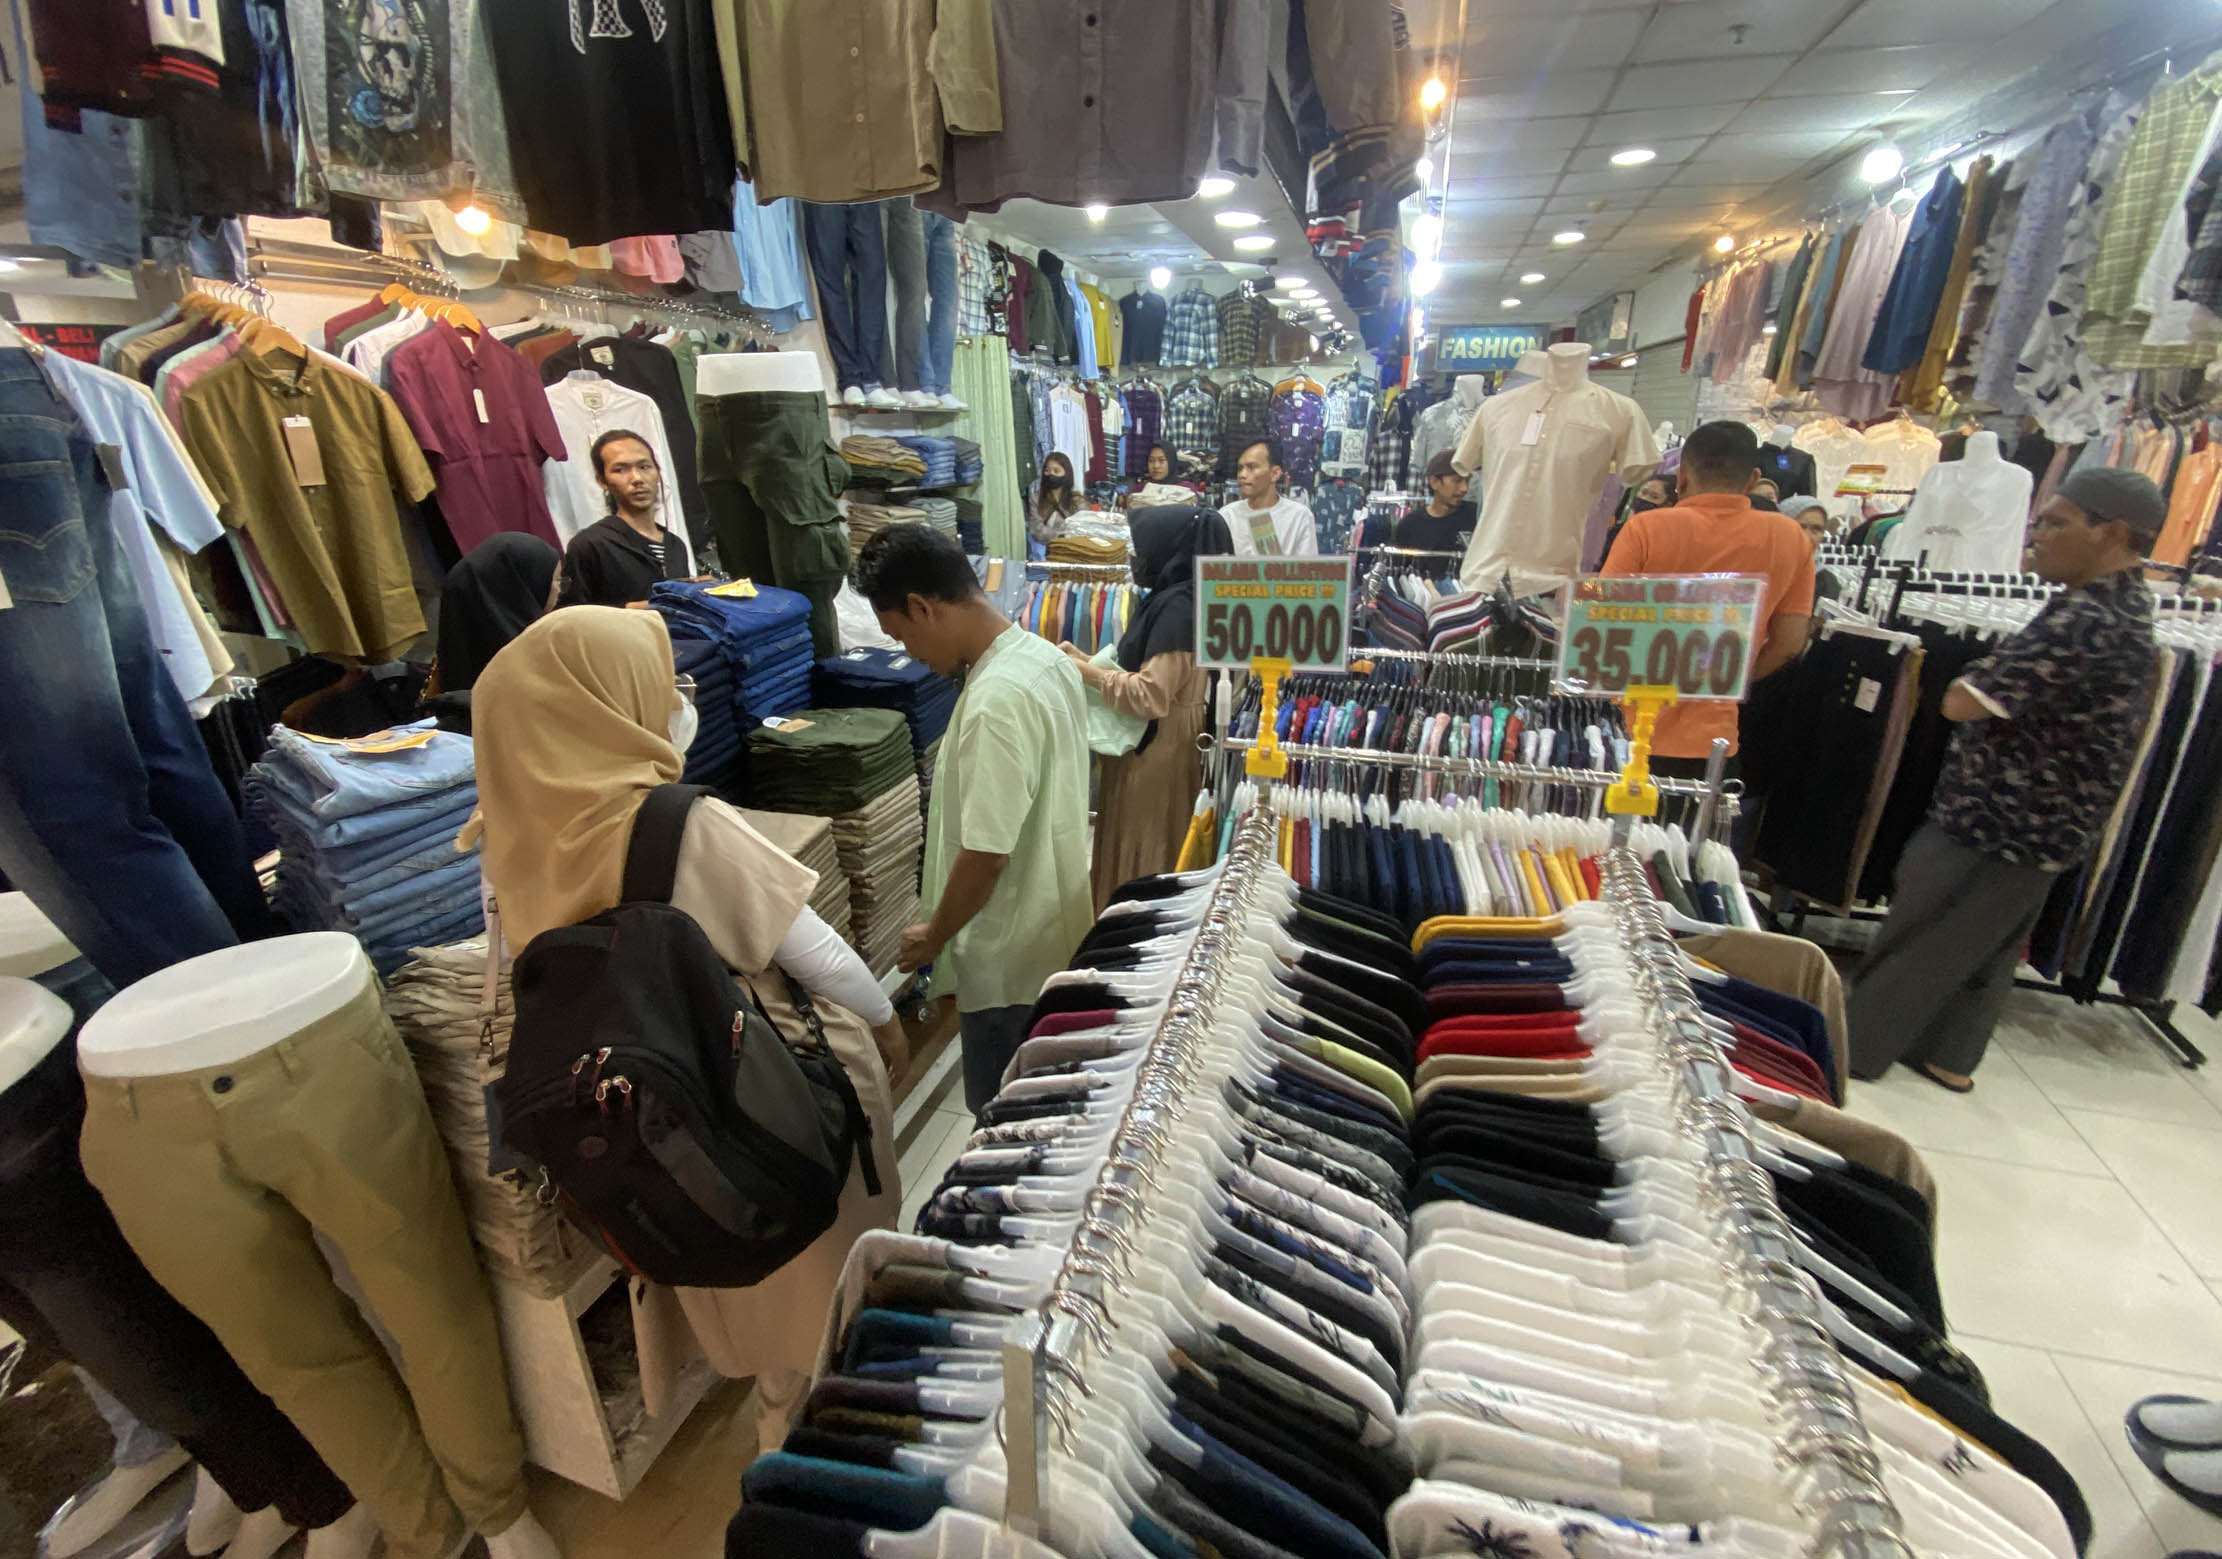 Jelang Hari Raya Idul Fitri nampak masyarakat mulai ramai memadati pusat perbelanjaan untuk berburu baju lebaran. Salah satunya di Blok M Square Jakarta Selatan. Senin 10 April 2023. Foto : Panji Asmoro/TrenAsia